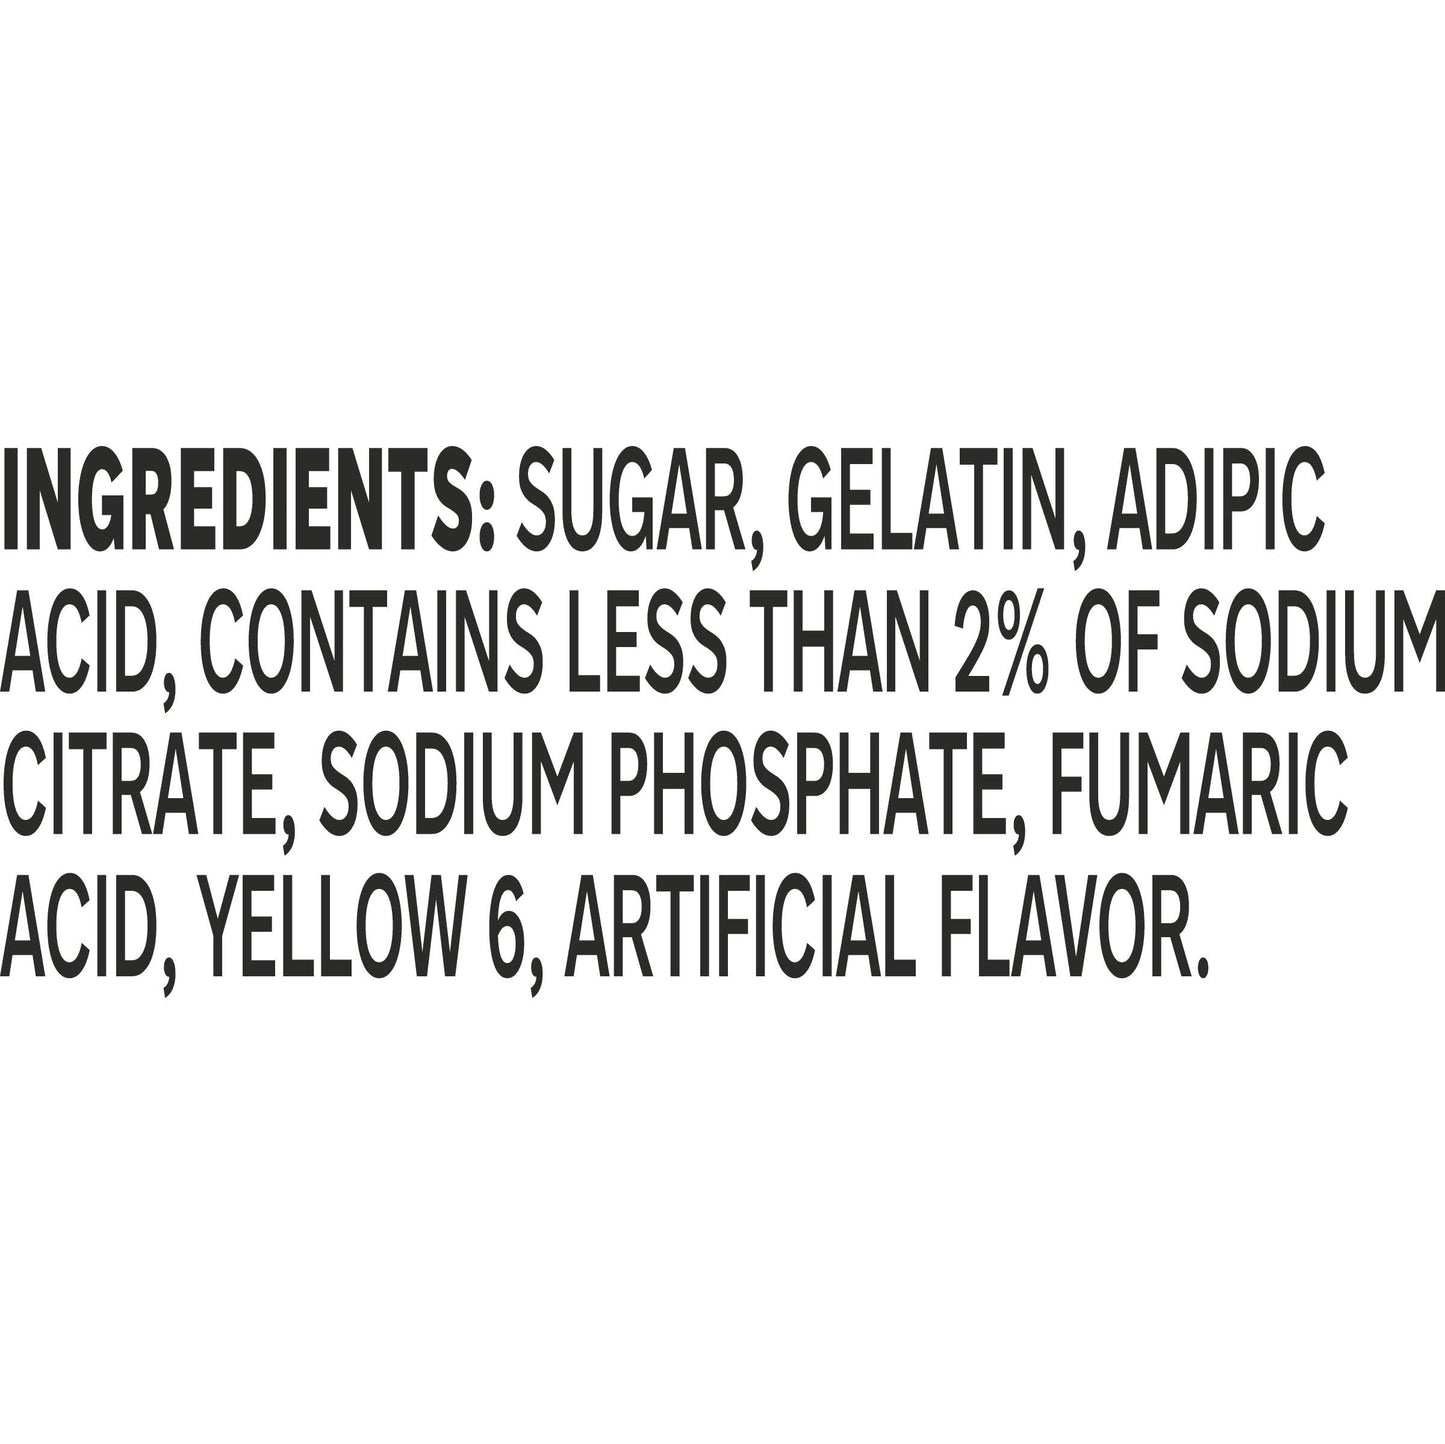 (4 pack) Jell-O Apricot Artificially Flavored Gelatin Dessert Mix, 3 oz Box